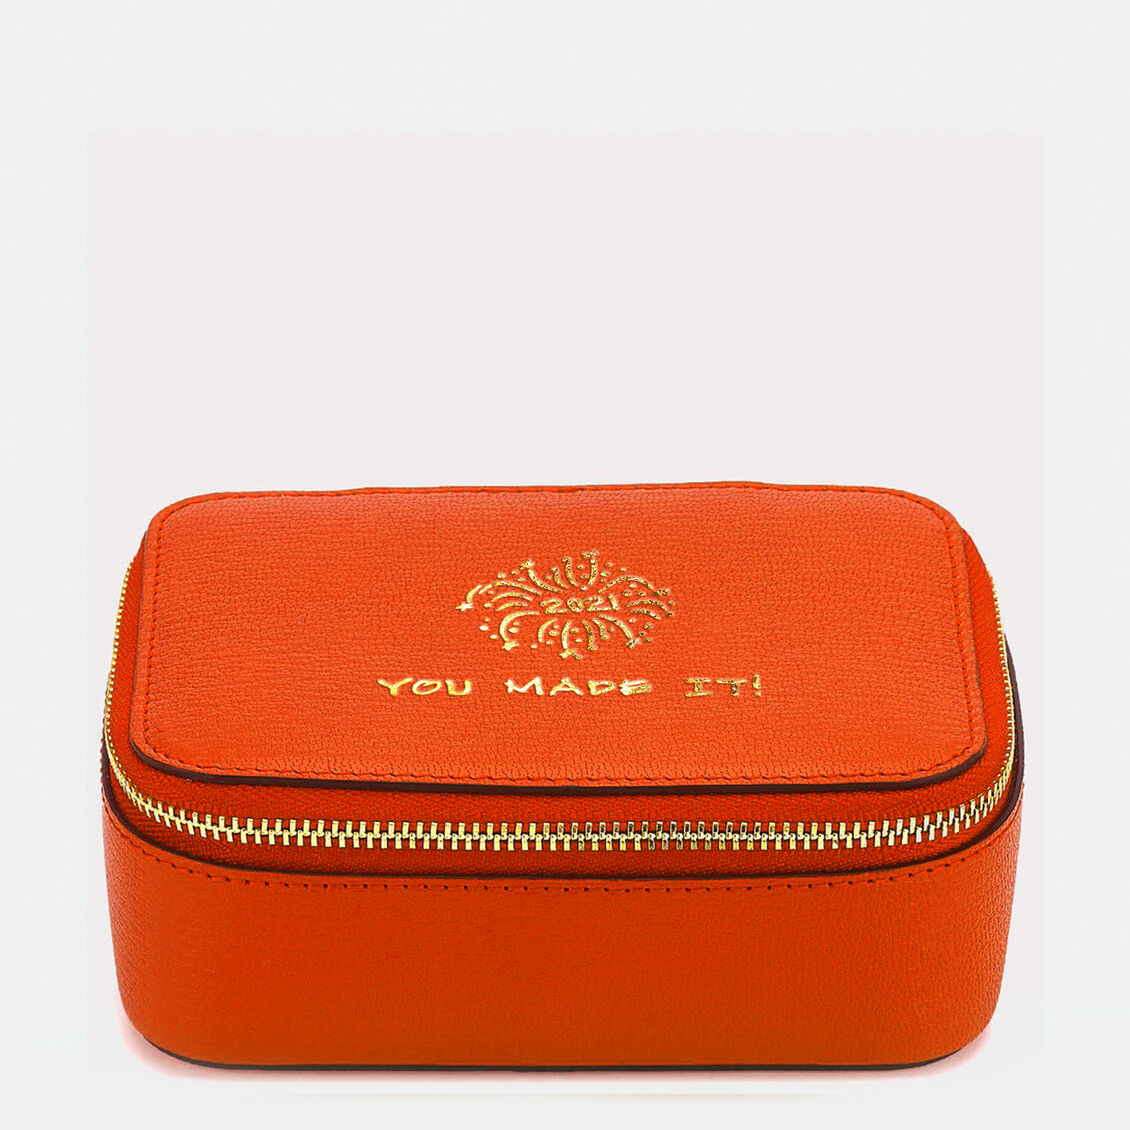 Yes Wow Box Medium -

                  
                    Capra Leather in Clementine -
                  

                  Anya Hindmarch UK
